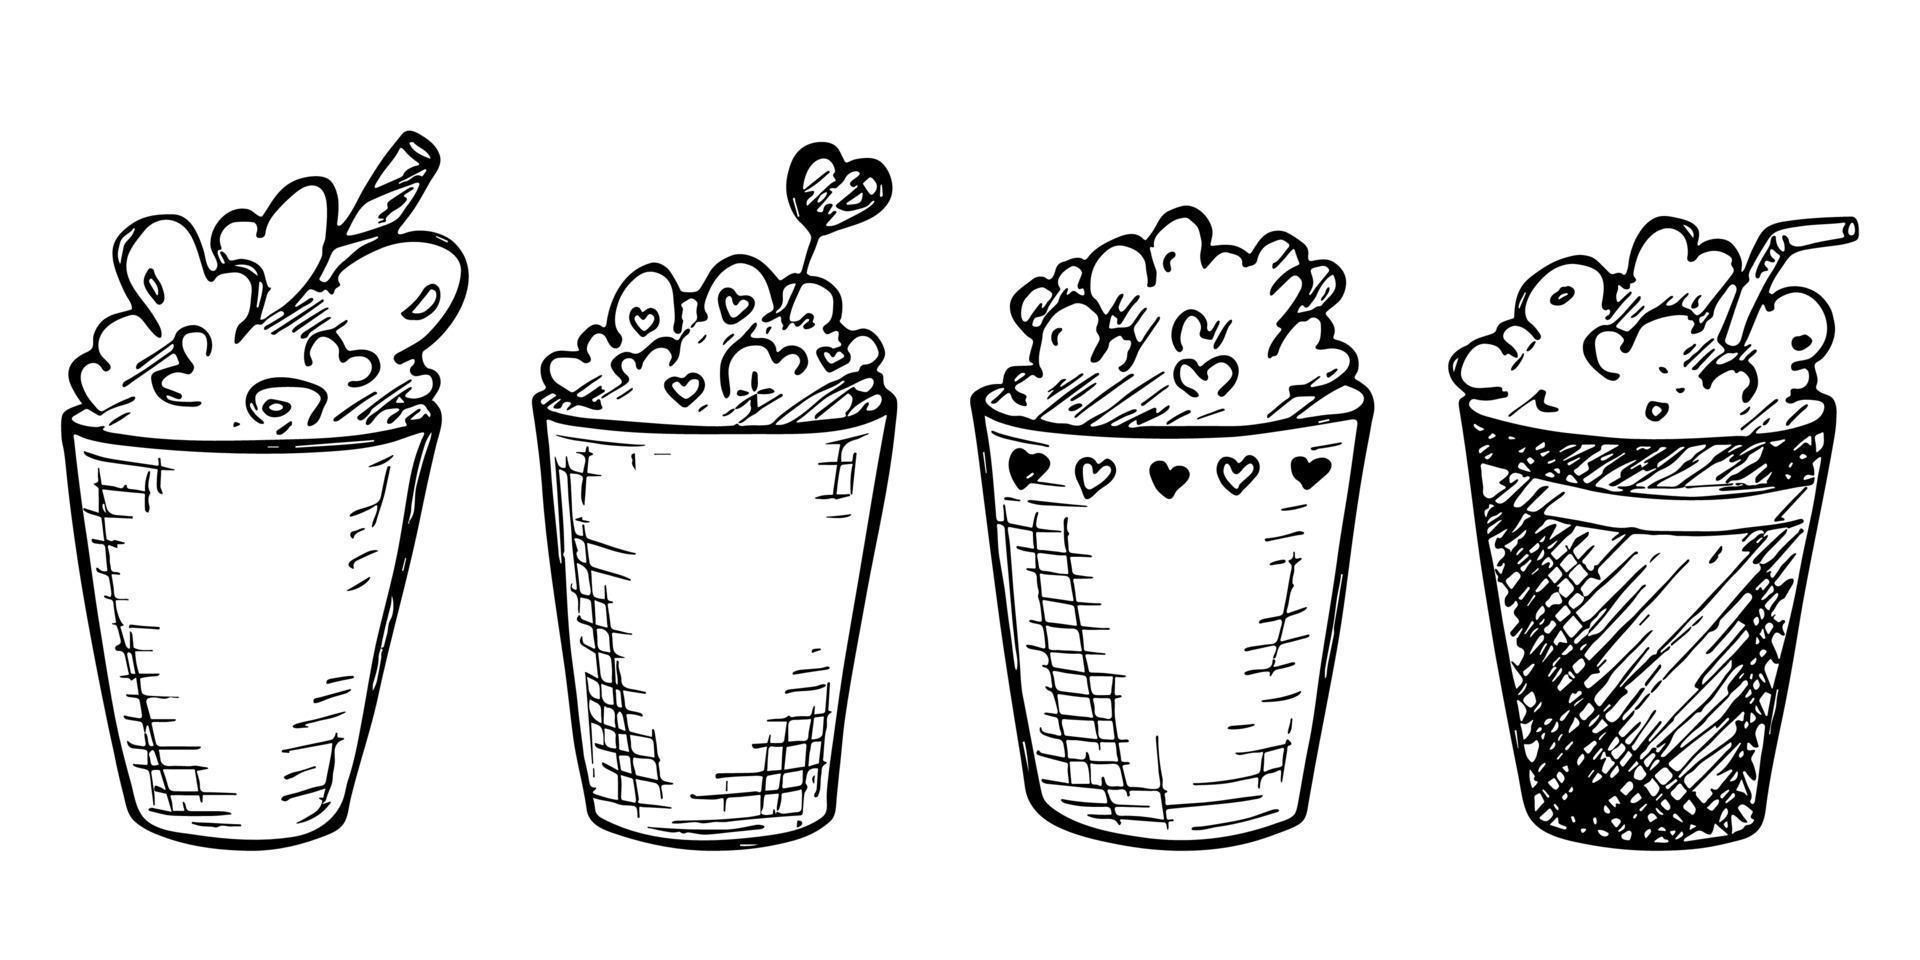 Cute milkshake illustration. Simple cup clipart. Pretty drink doodle set vector